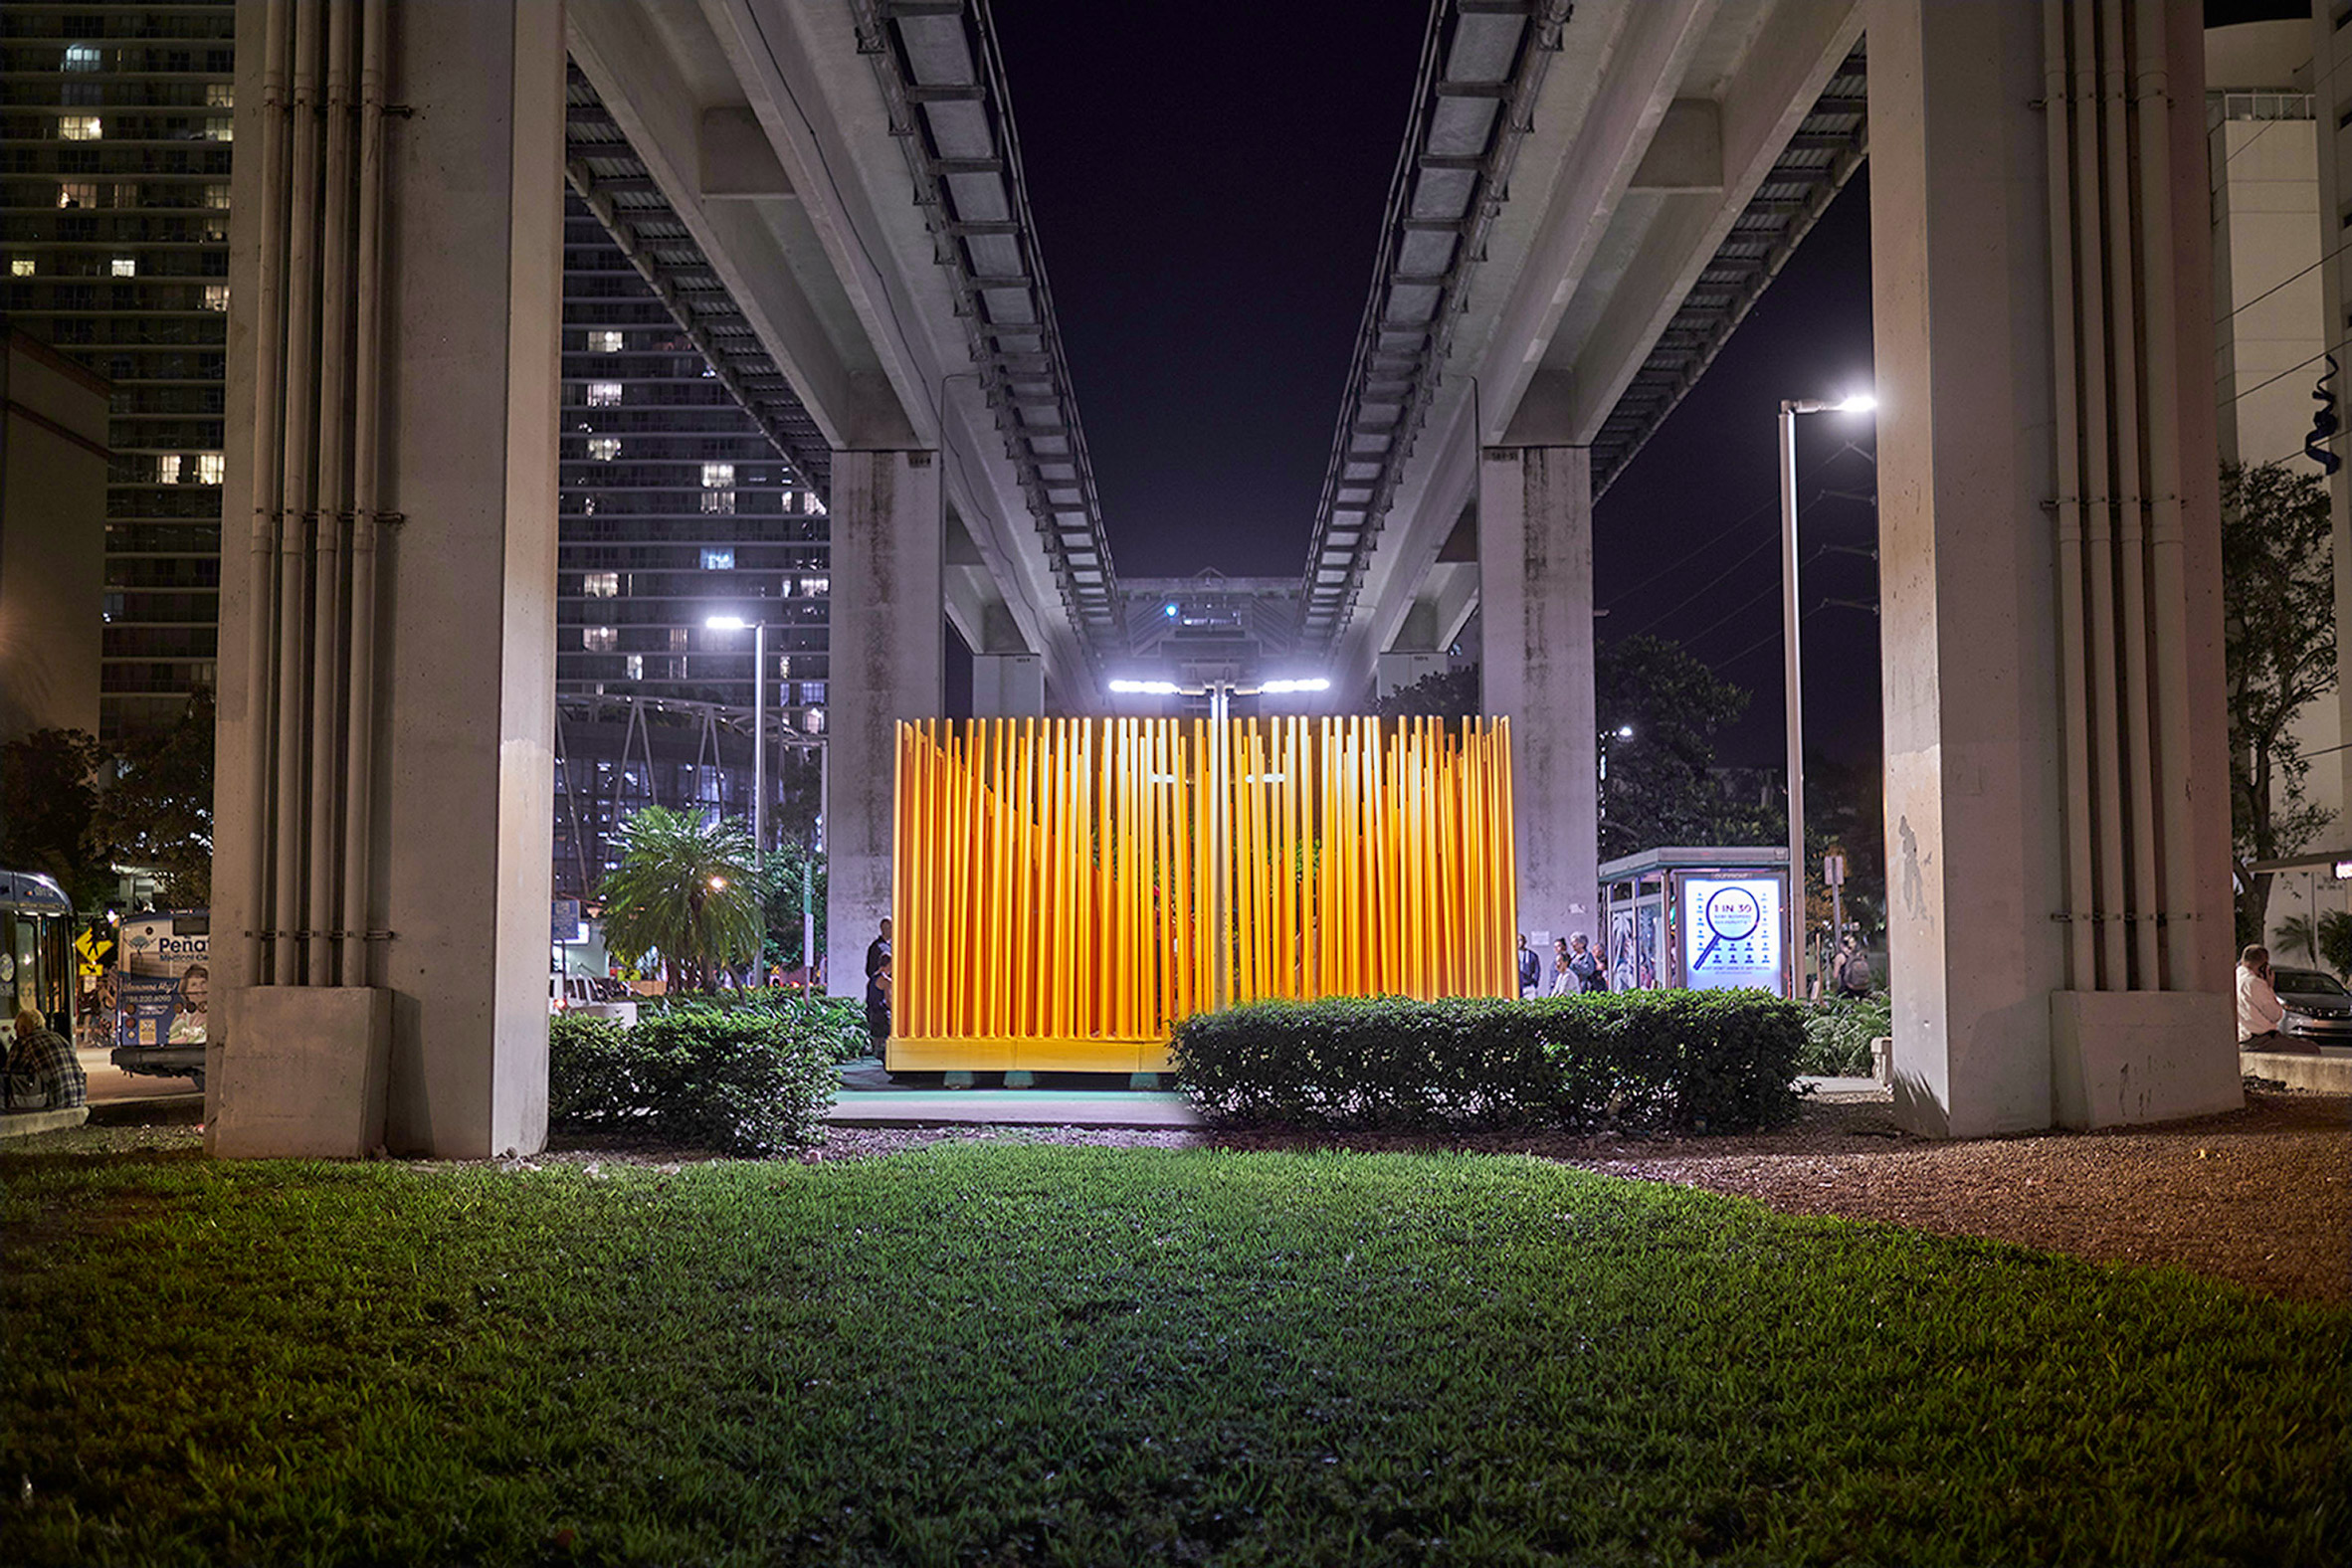 Architecture students install bright orange stage below Miami transit station-11